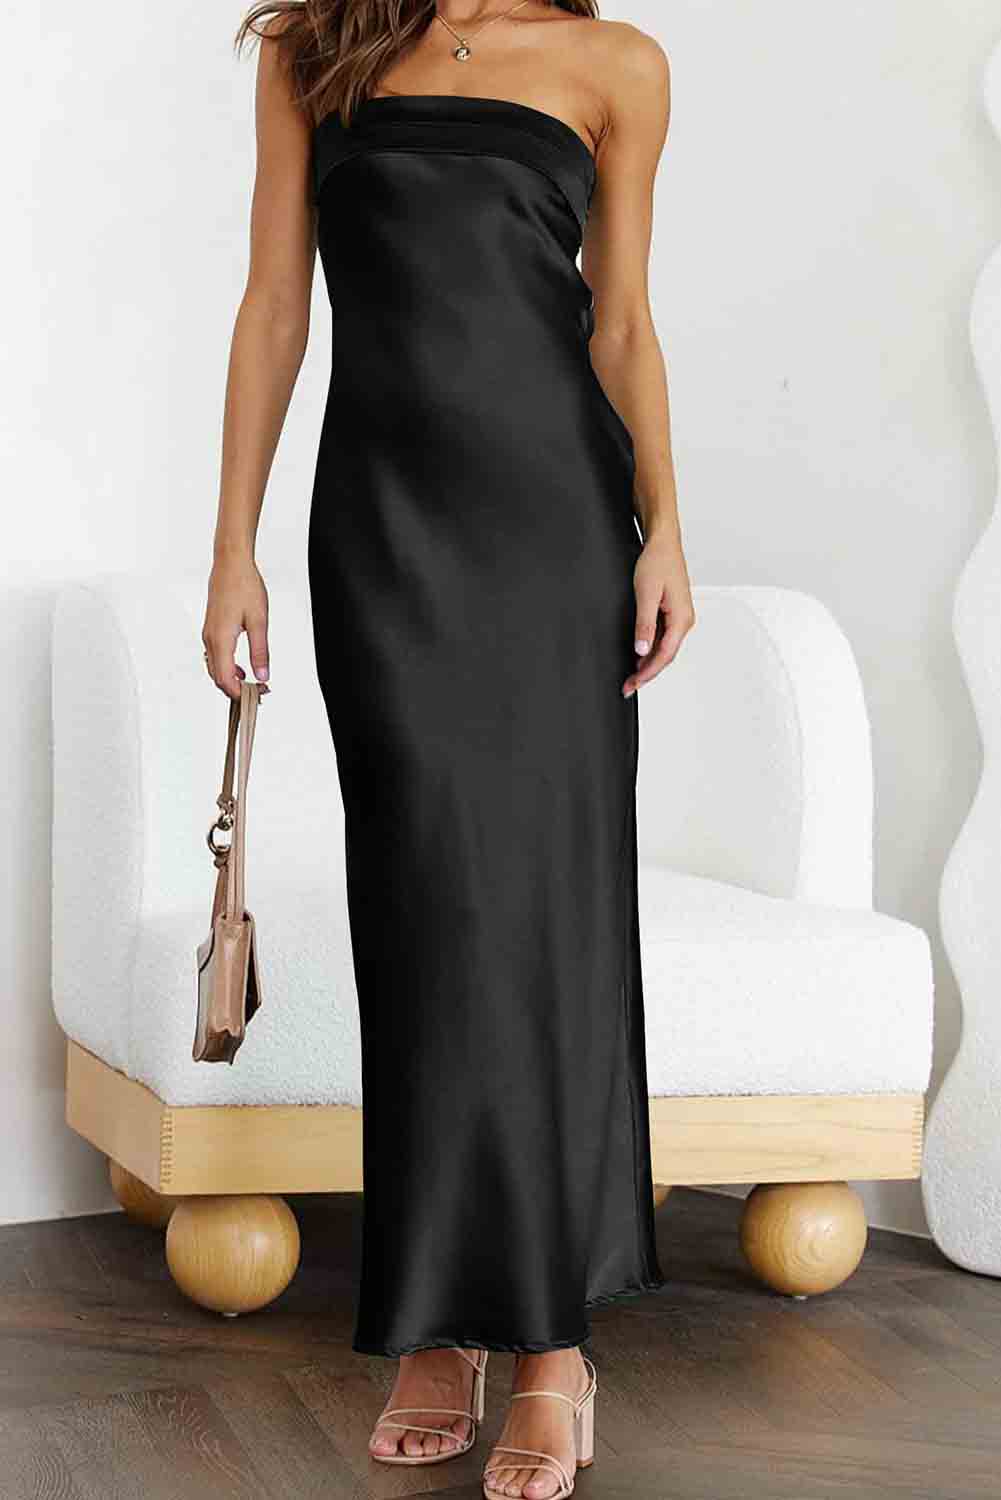 Black Satin Tube Dress | Fashionsarah.com